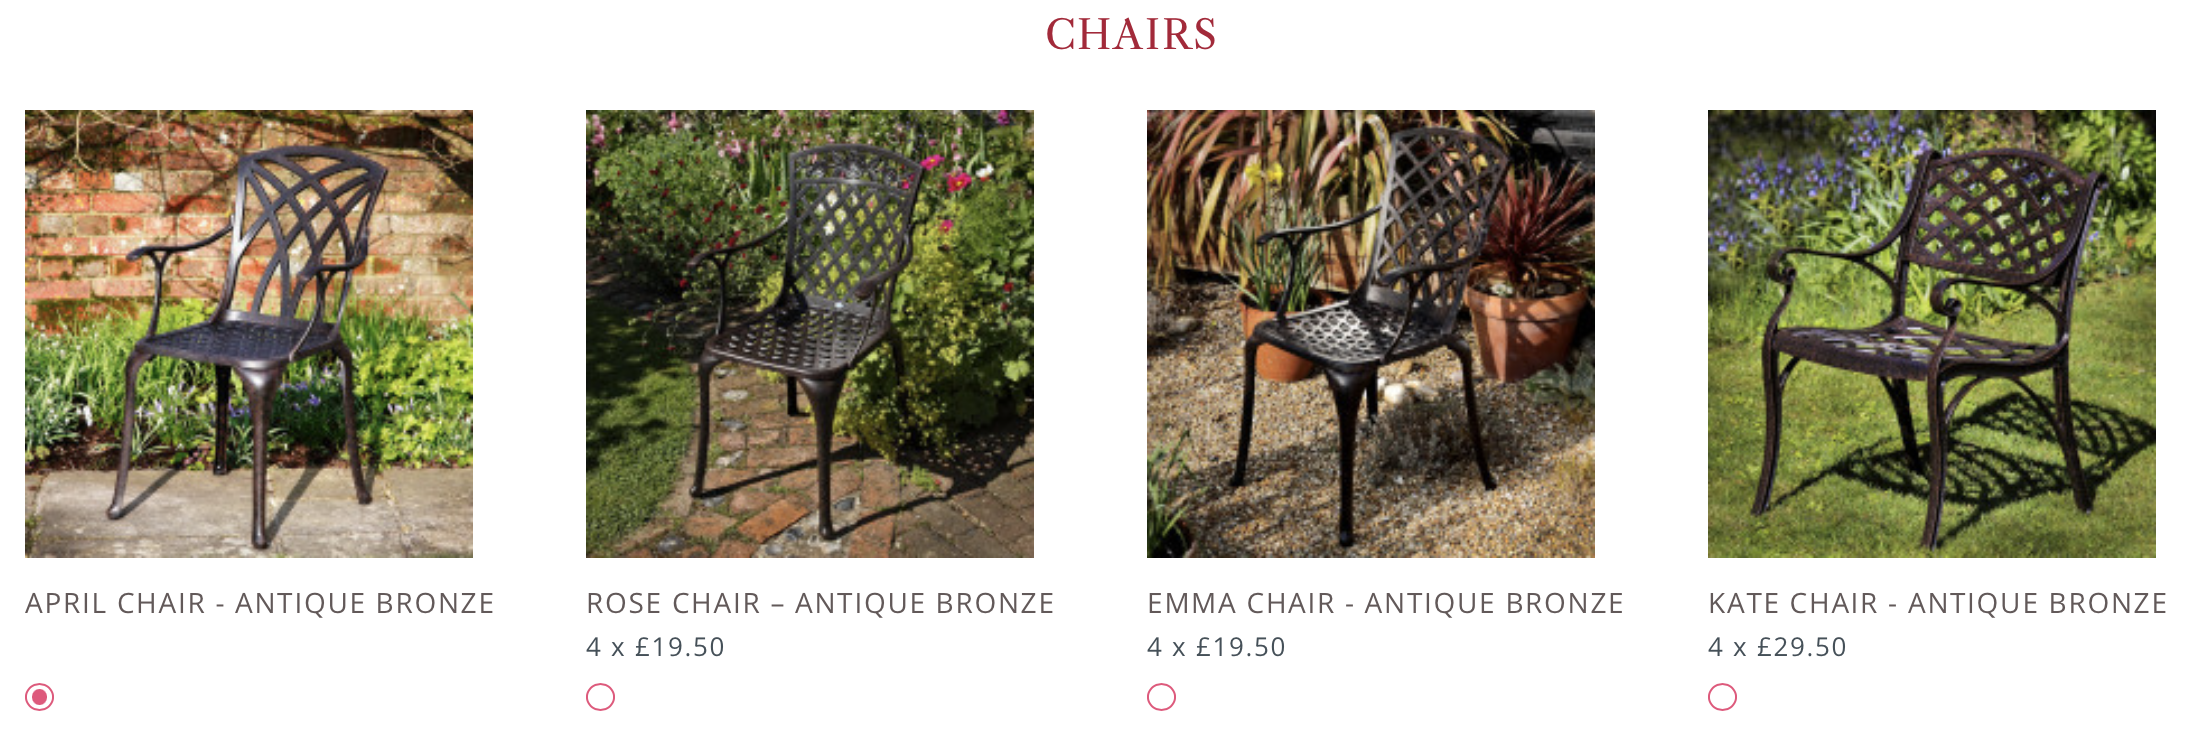 Mia Garden Chair Options/Upgrades